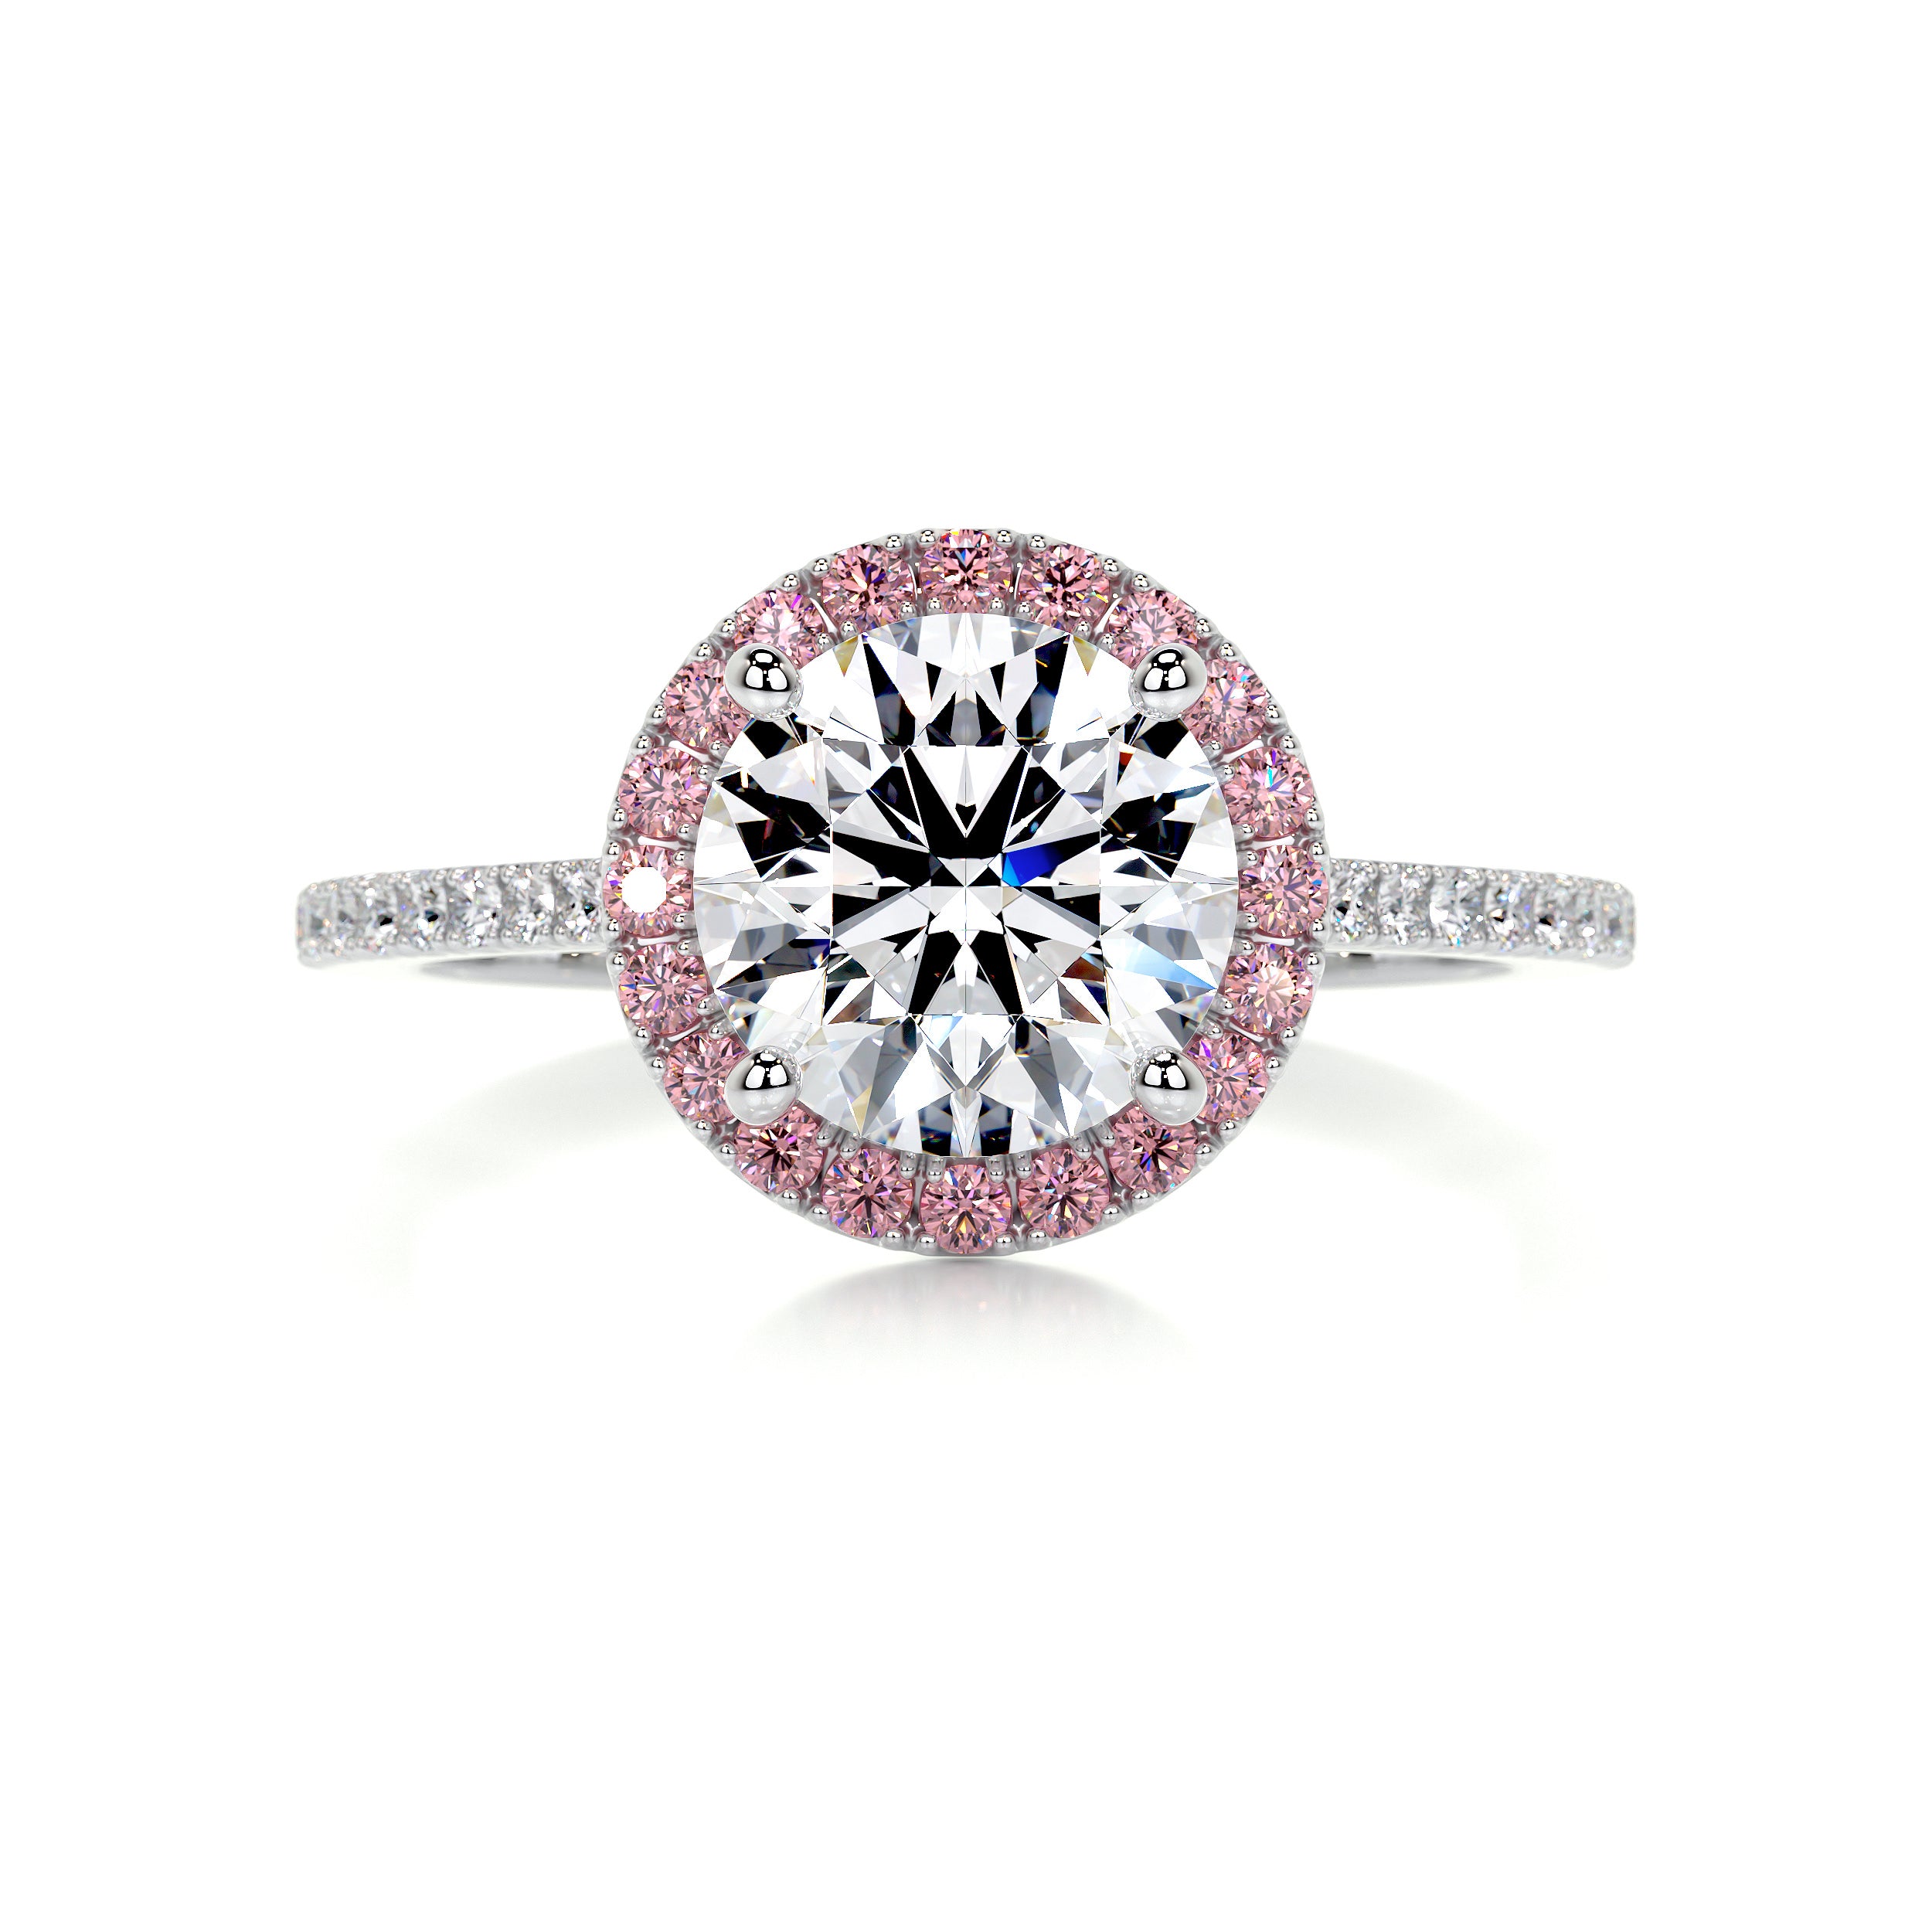 Layla Diamond Engagement Ring   (2.5 Carat) - 18K White Gold